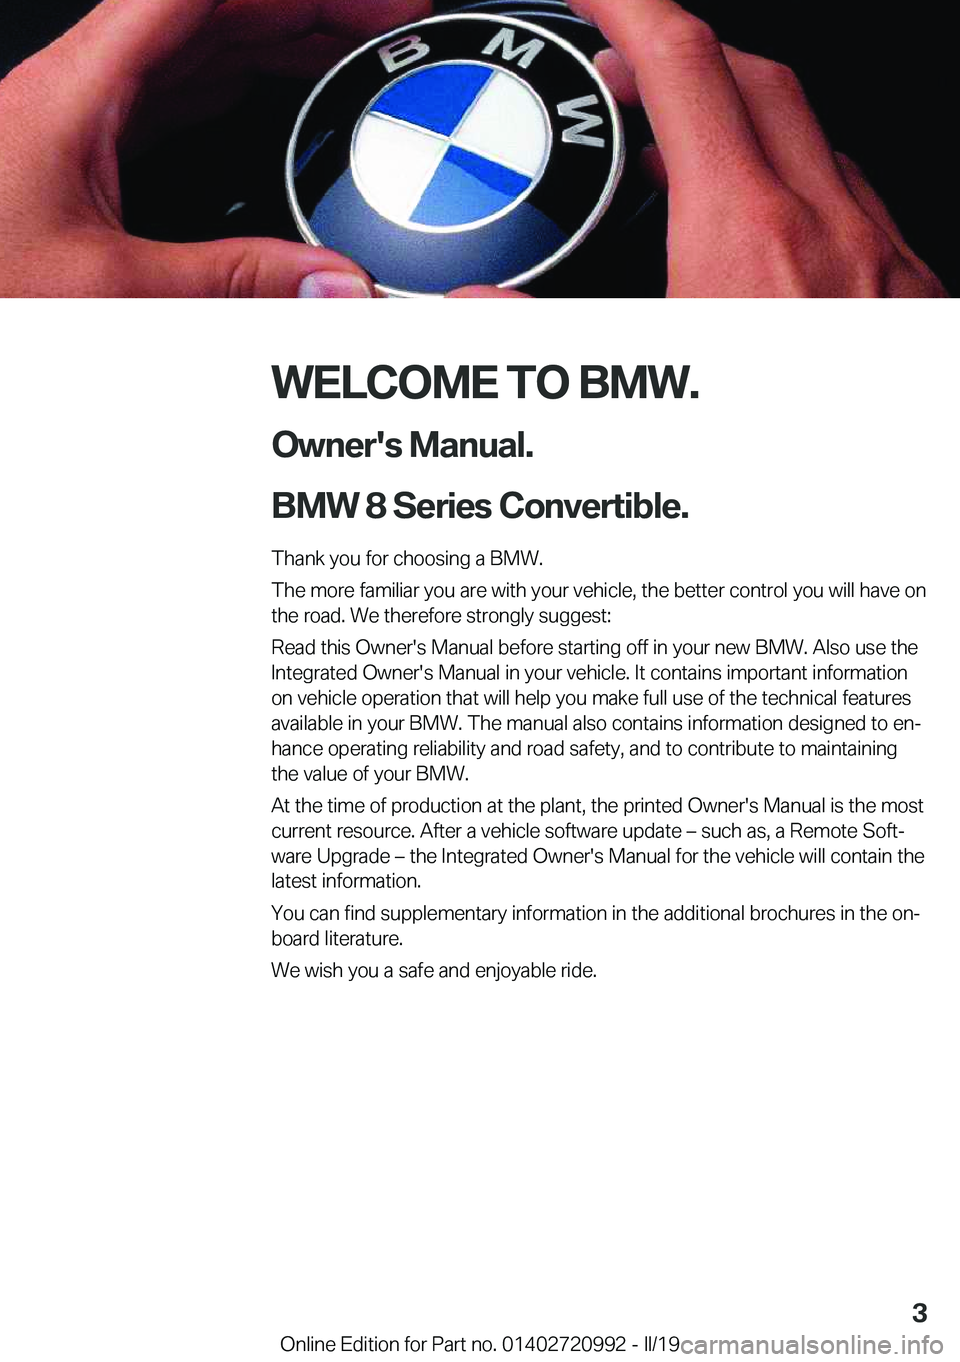 BMW 8 SERIES CONVERTIBLE 2019  Owners Manual �W�E�L�C�O�M�E��T�O��B�M�W�.�O�w�n�e�r�'�s��M�a�n�u�a�l�.
�B�M�W��8��S�e�r�i�e�s��C�o�n�v�e�r�t�i�b�l�e�.
�T�h�a�n�k��y�o�u��f�o�r��c�h�o�o�s�i�n�g��a��B�M�W�.
�T�h�e��m�o�r�e��f�a�m�